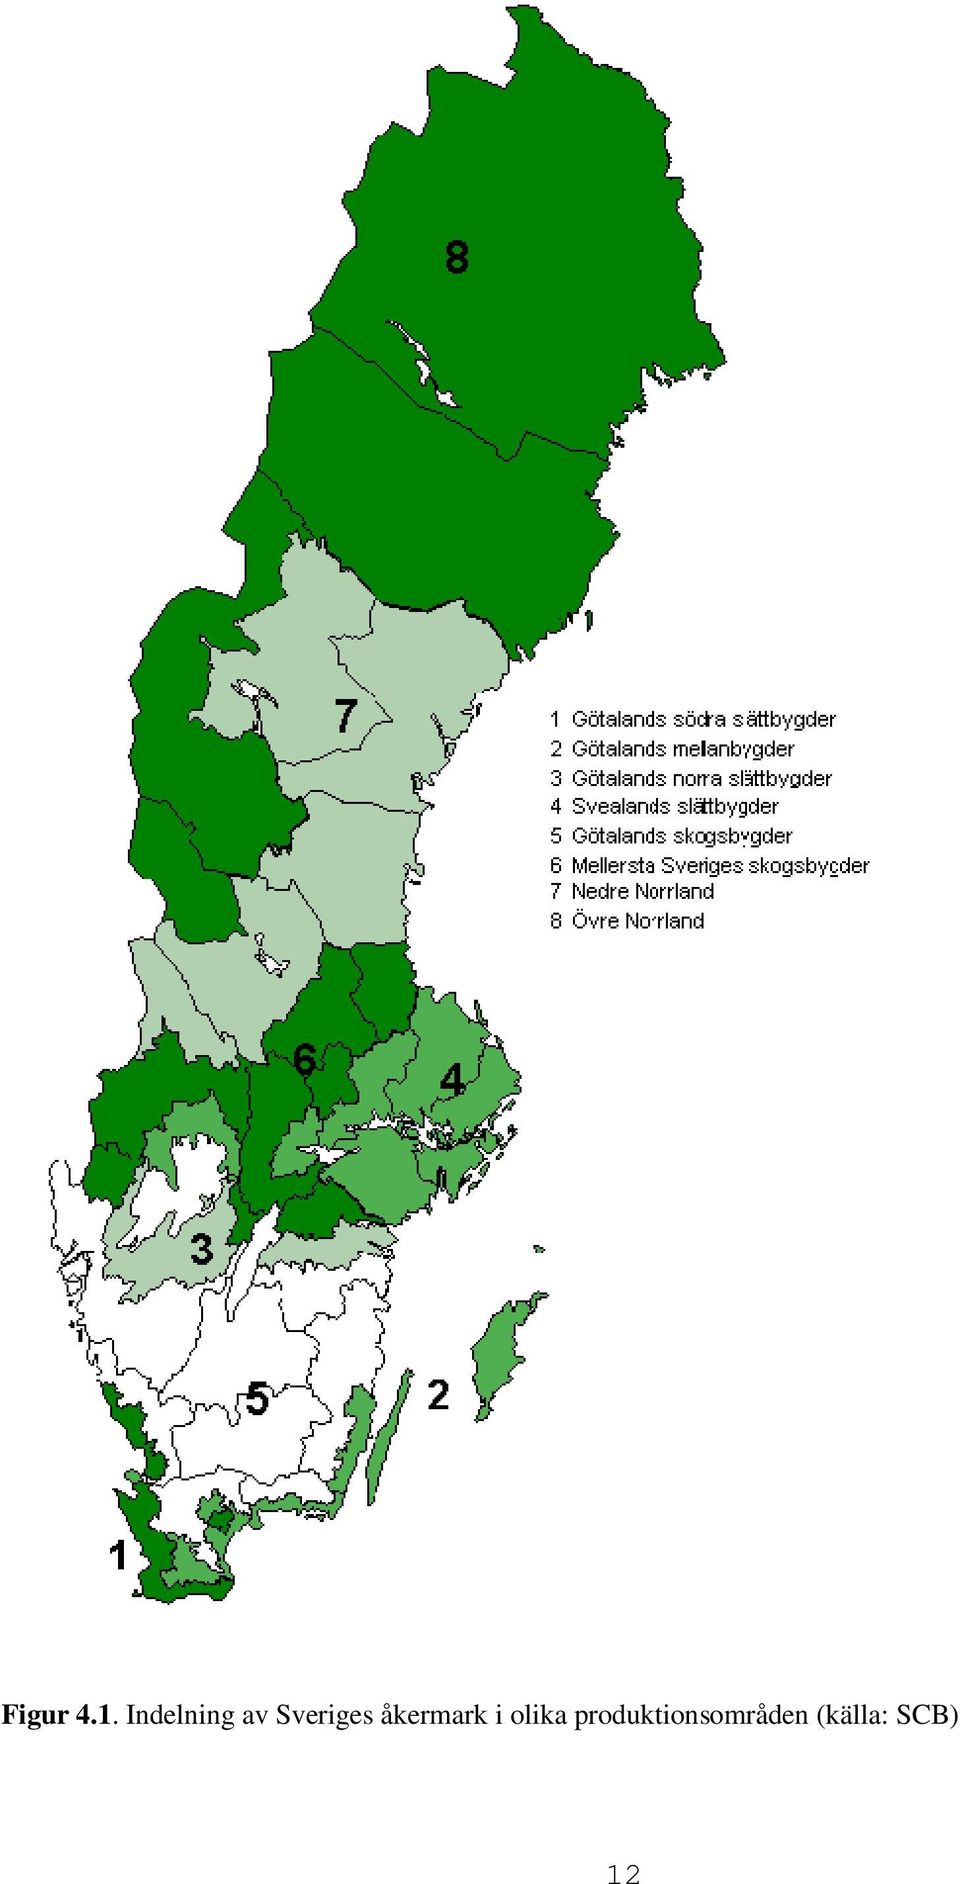 Sveriges åkermark i